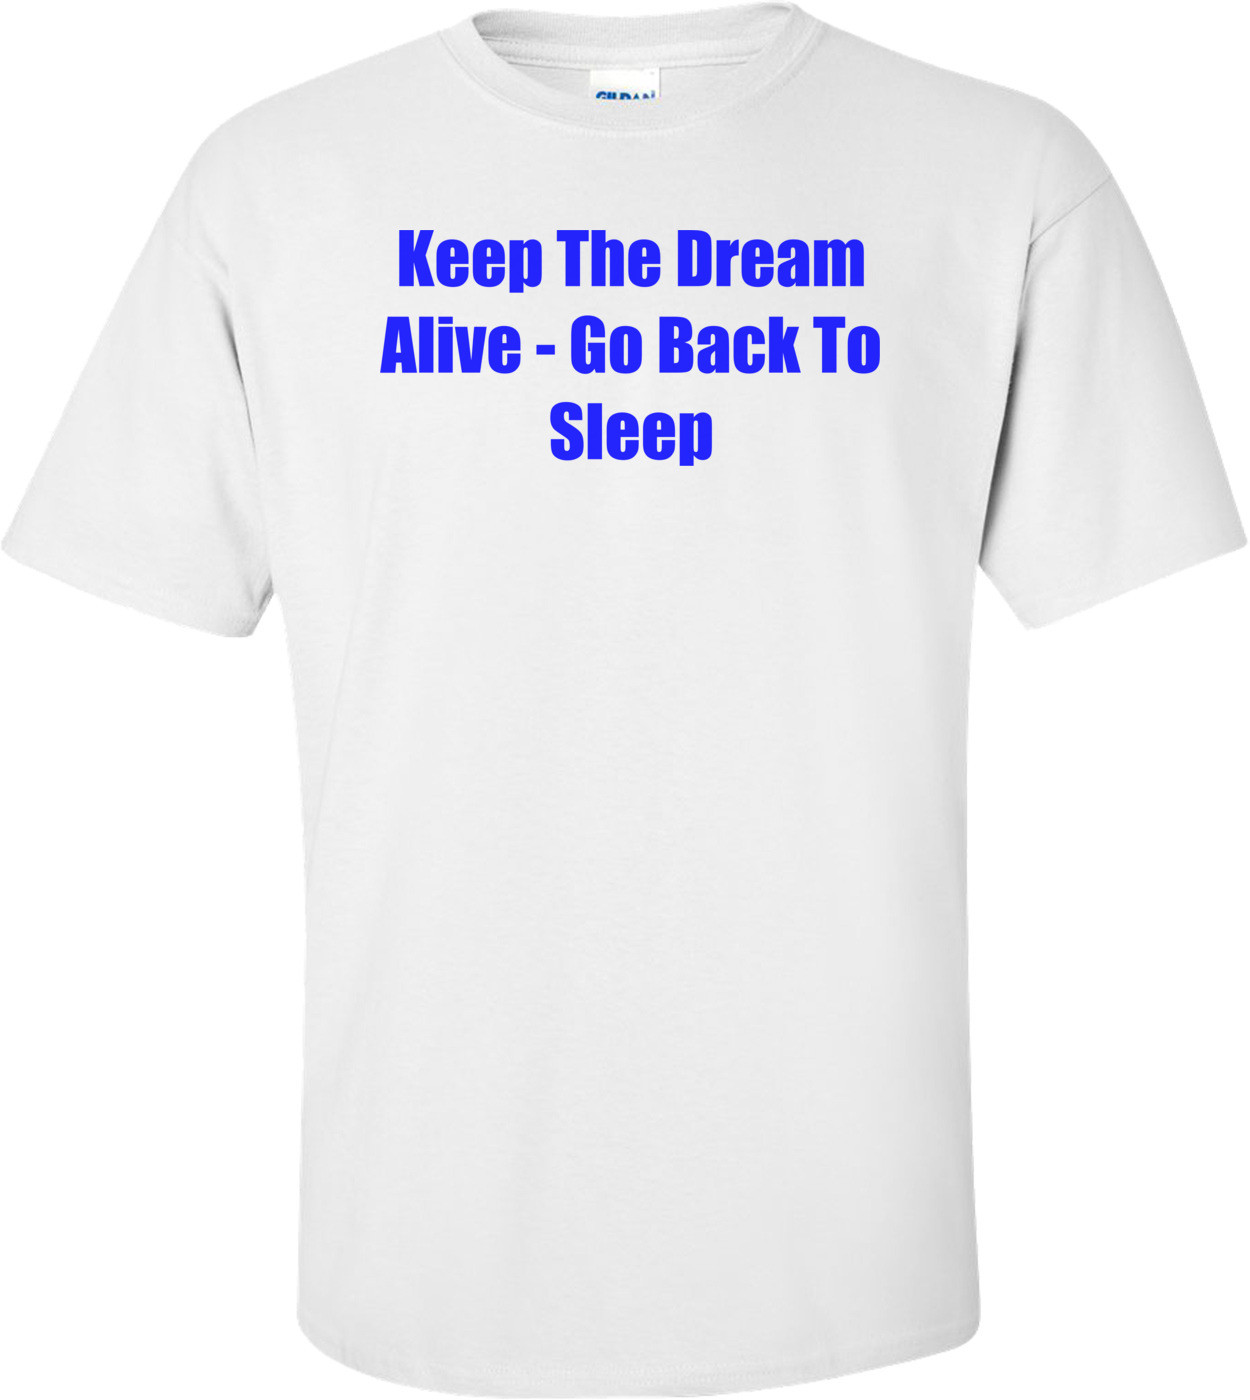 Keep The Dream Alive - Go Back To Sleep